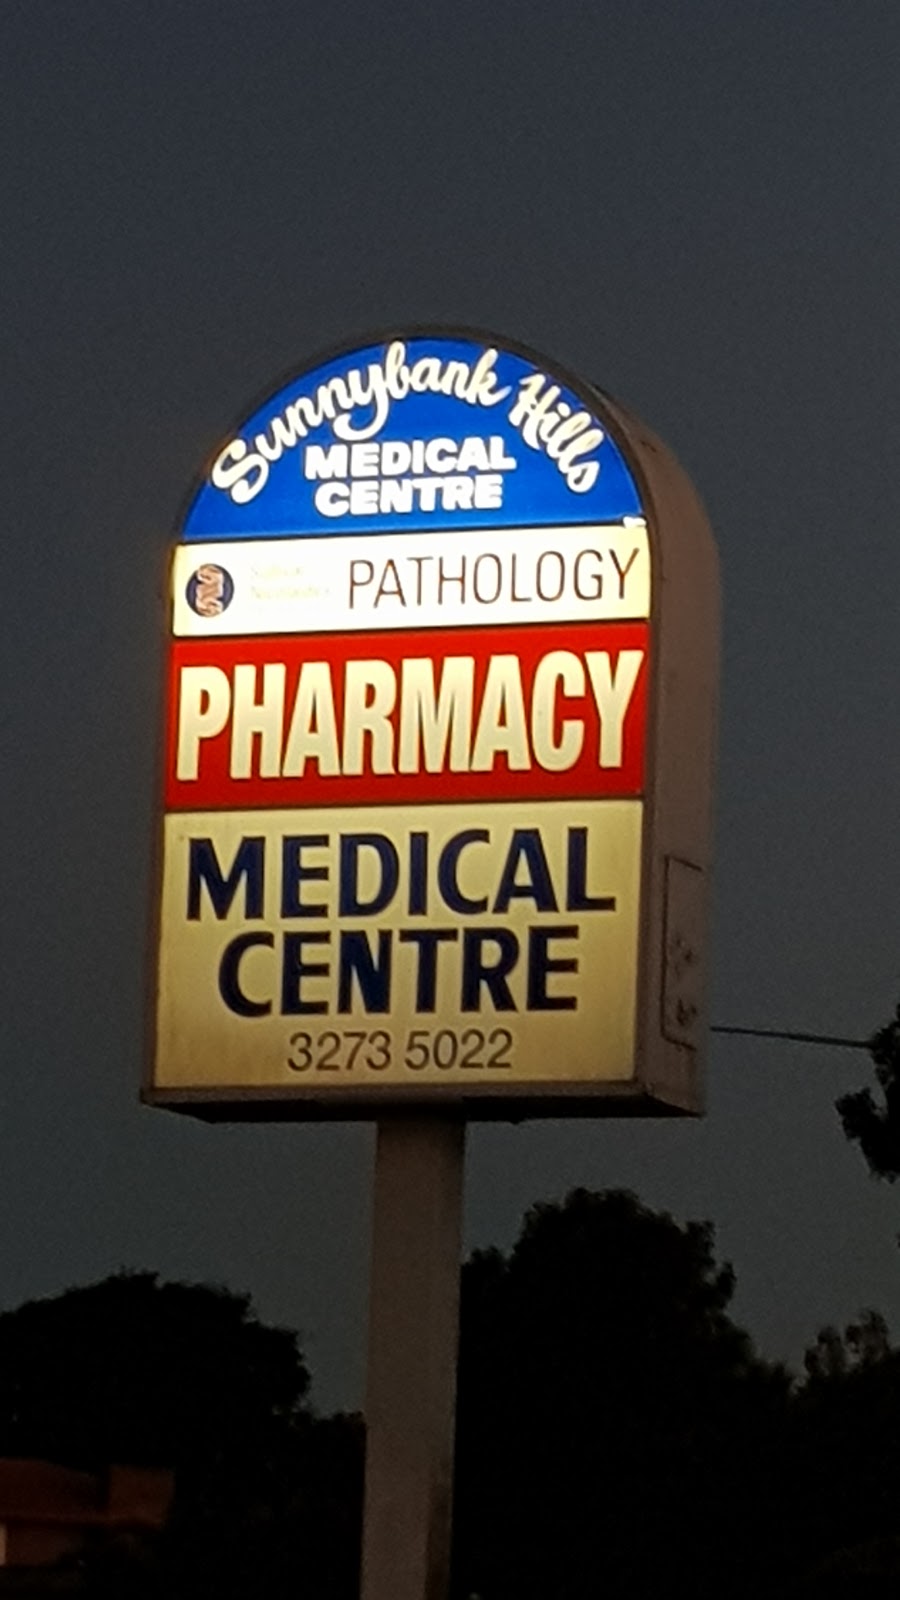 Sunnybank Hills Pharmacy | pharmacy | 4 Noelana St, Sunnybank Hills QLD 4109, Australia | 0732737244 OR +61 7 3273 7244